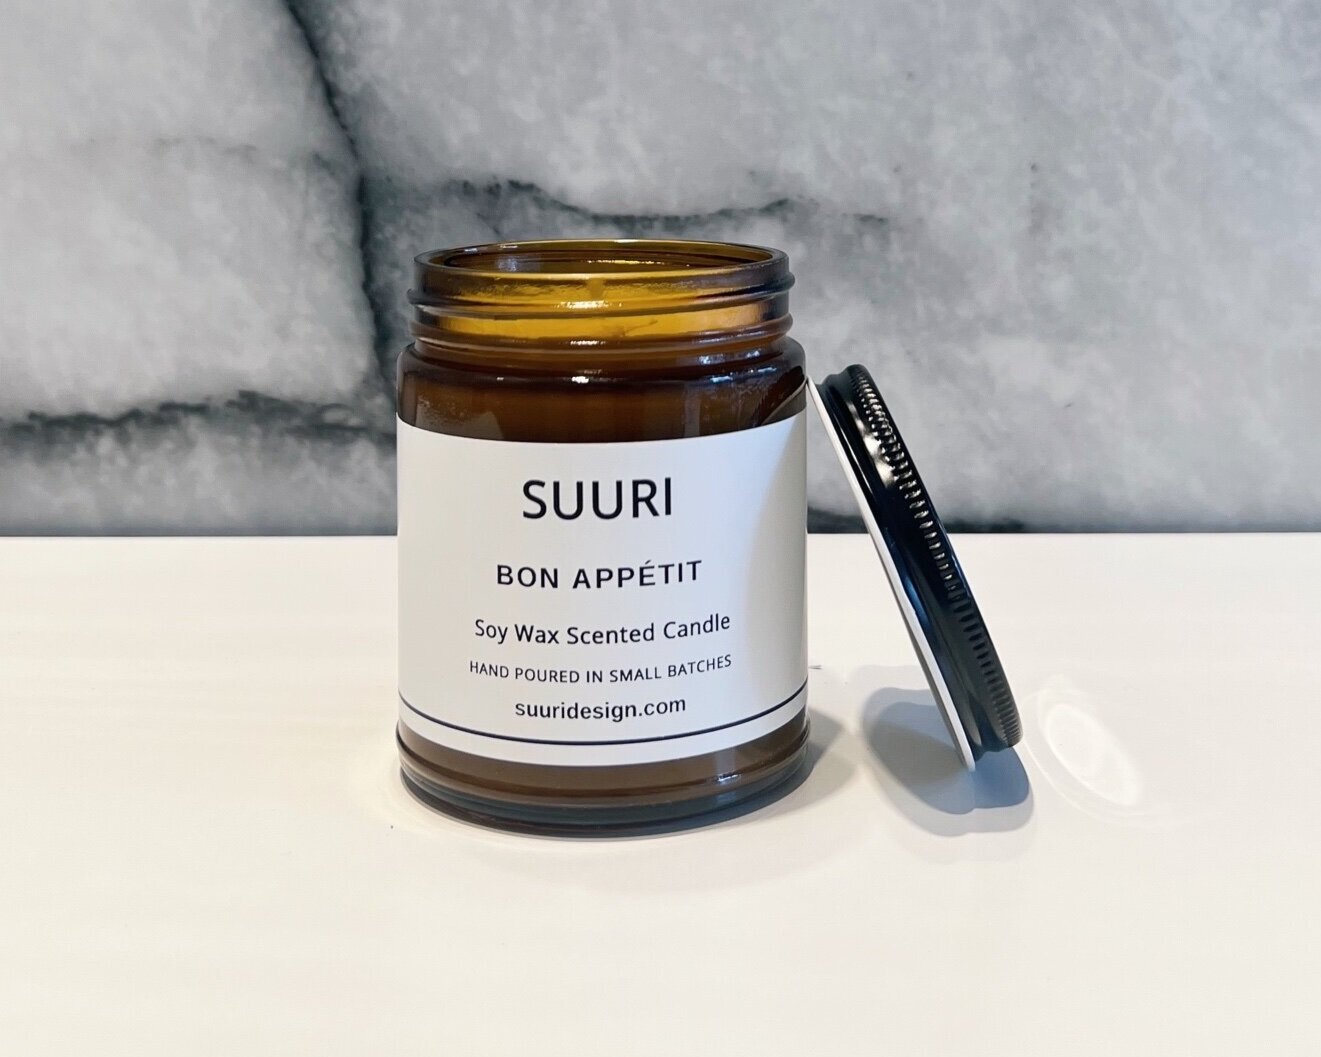 Suuri Design - 100% Natural Soy Wax Candles